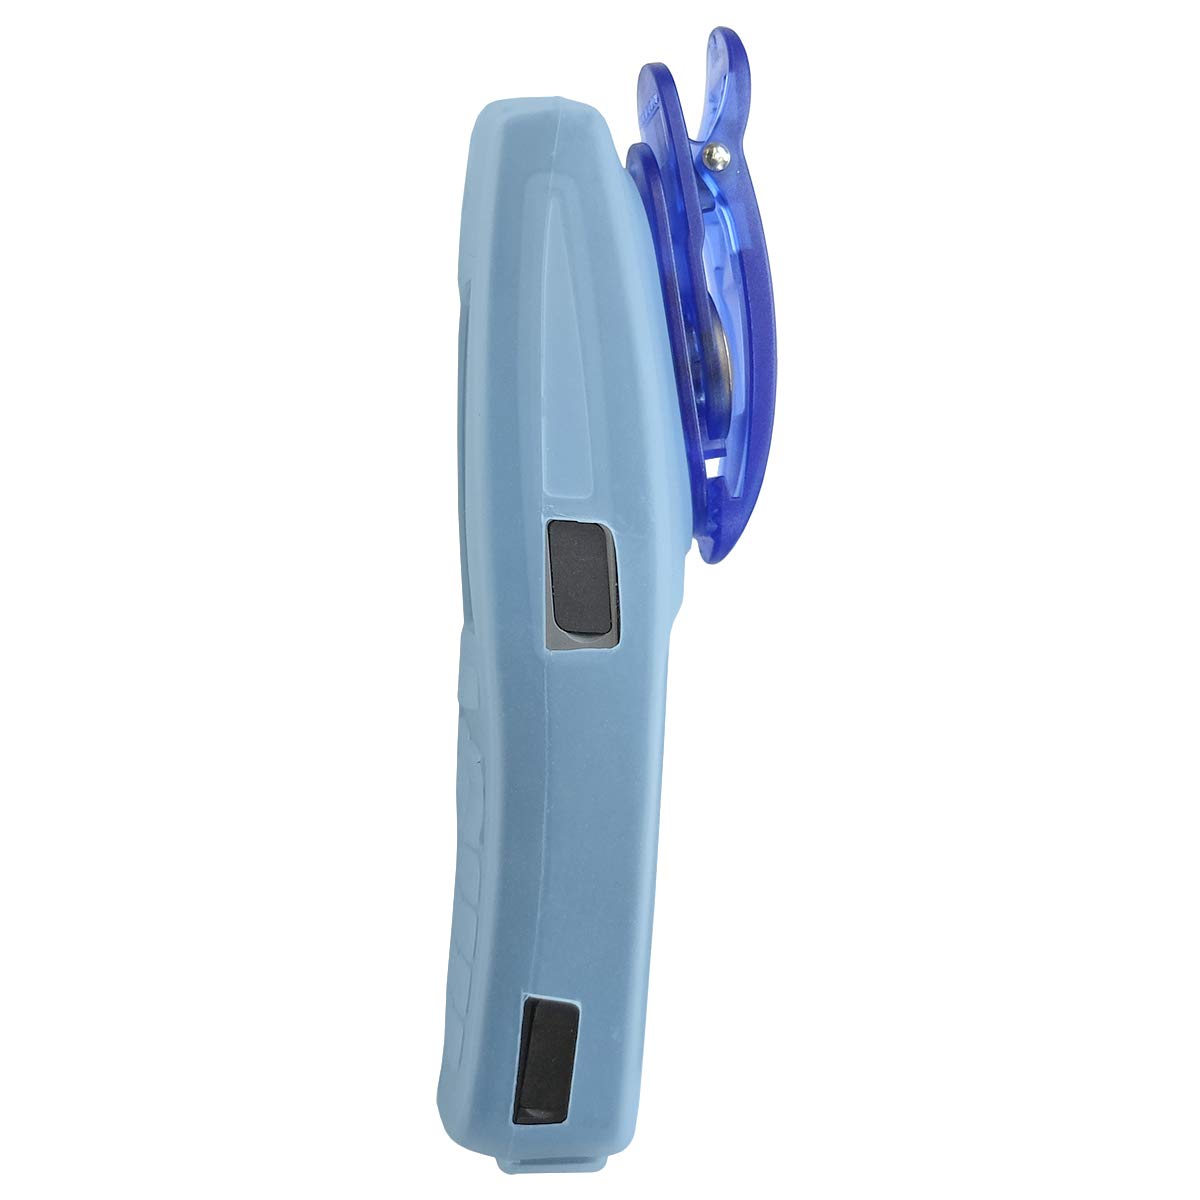 Blue Silicone Gel Case for Polycom SpectraLink 8400 Phones: 2310-37180-002